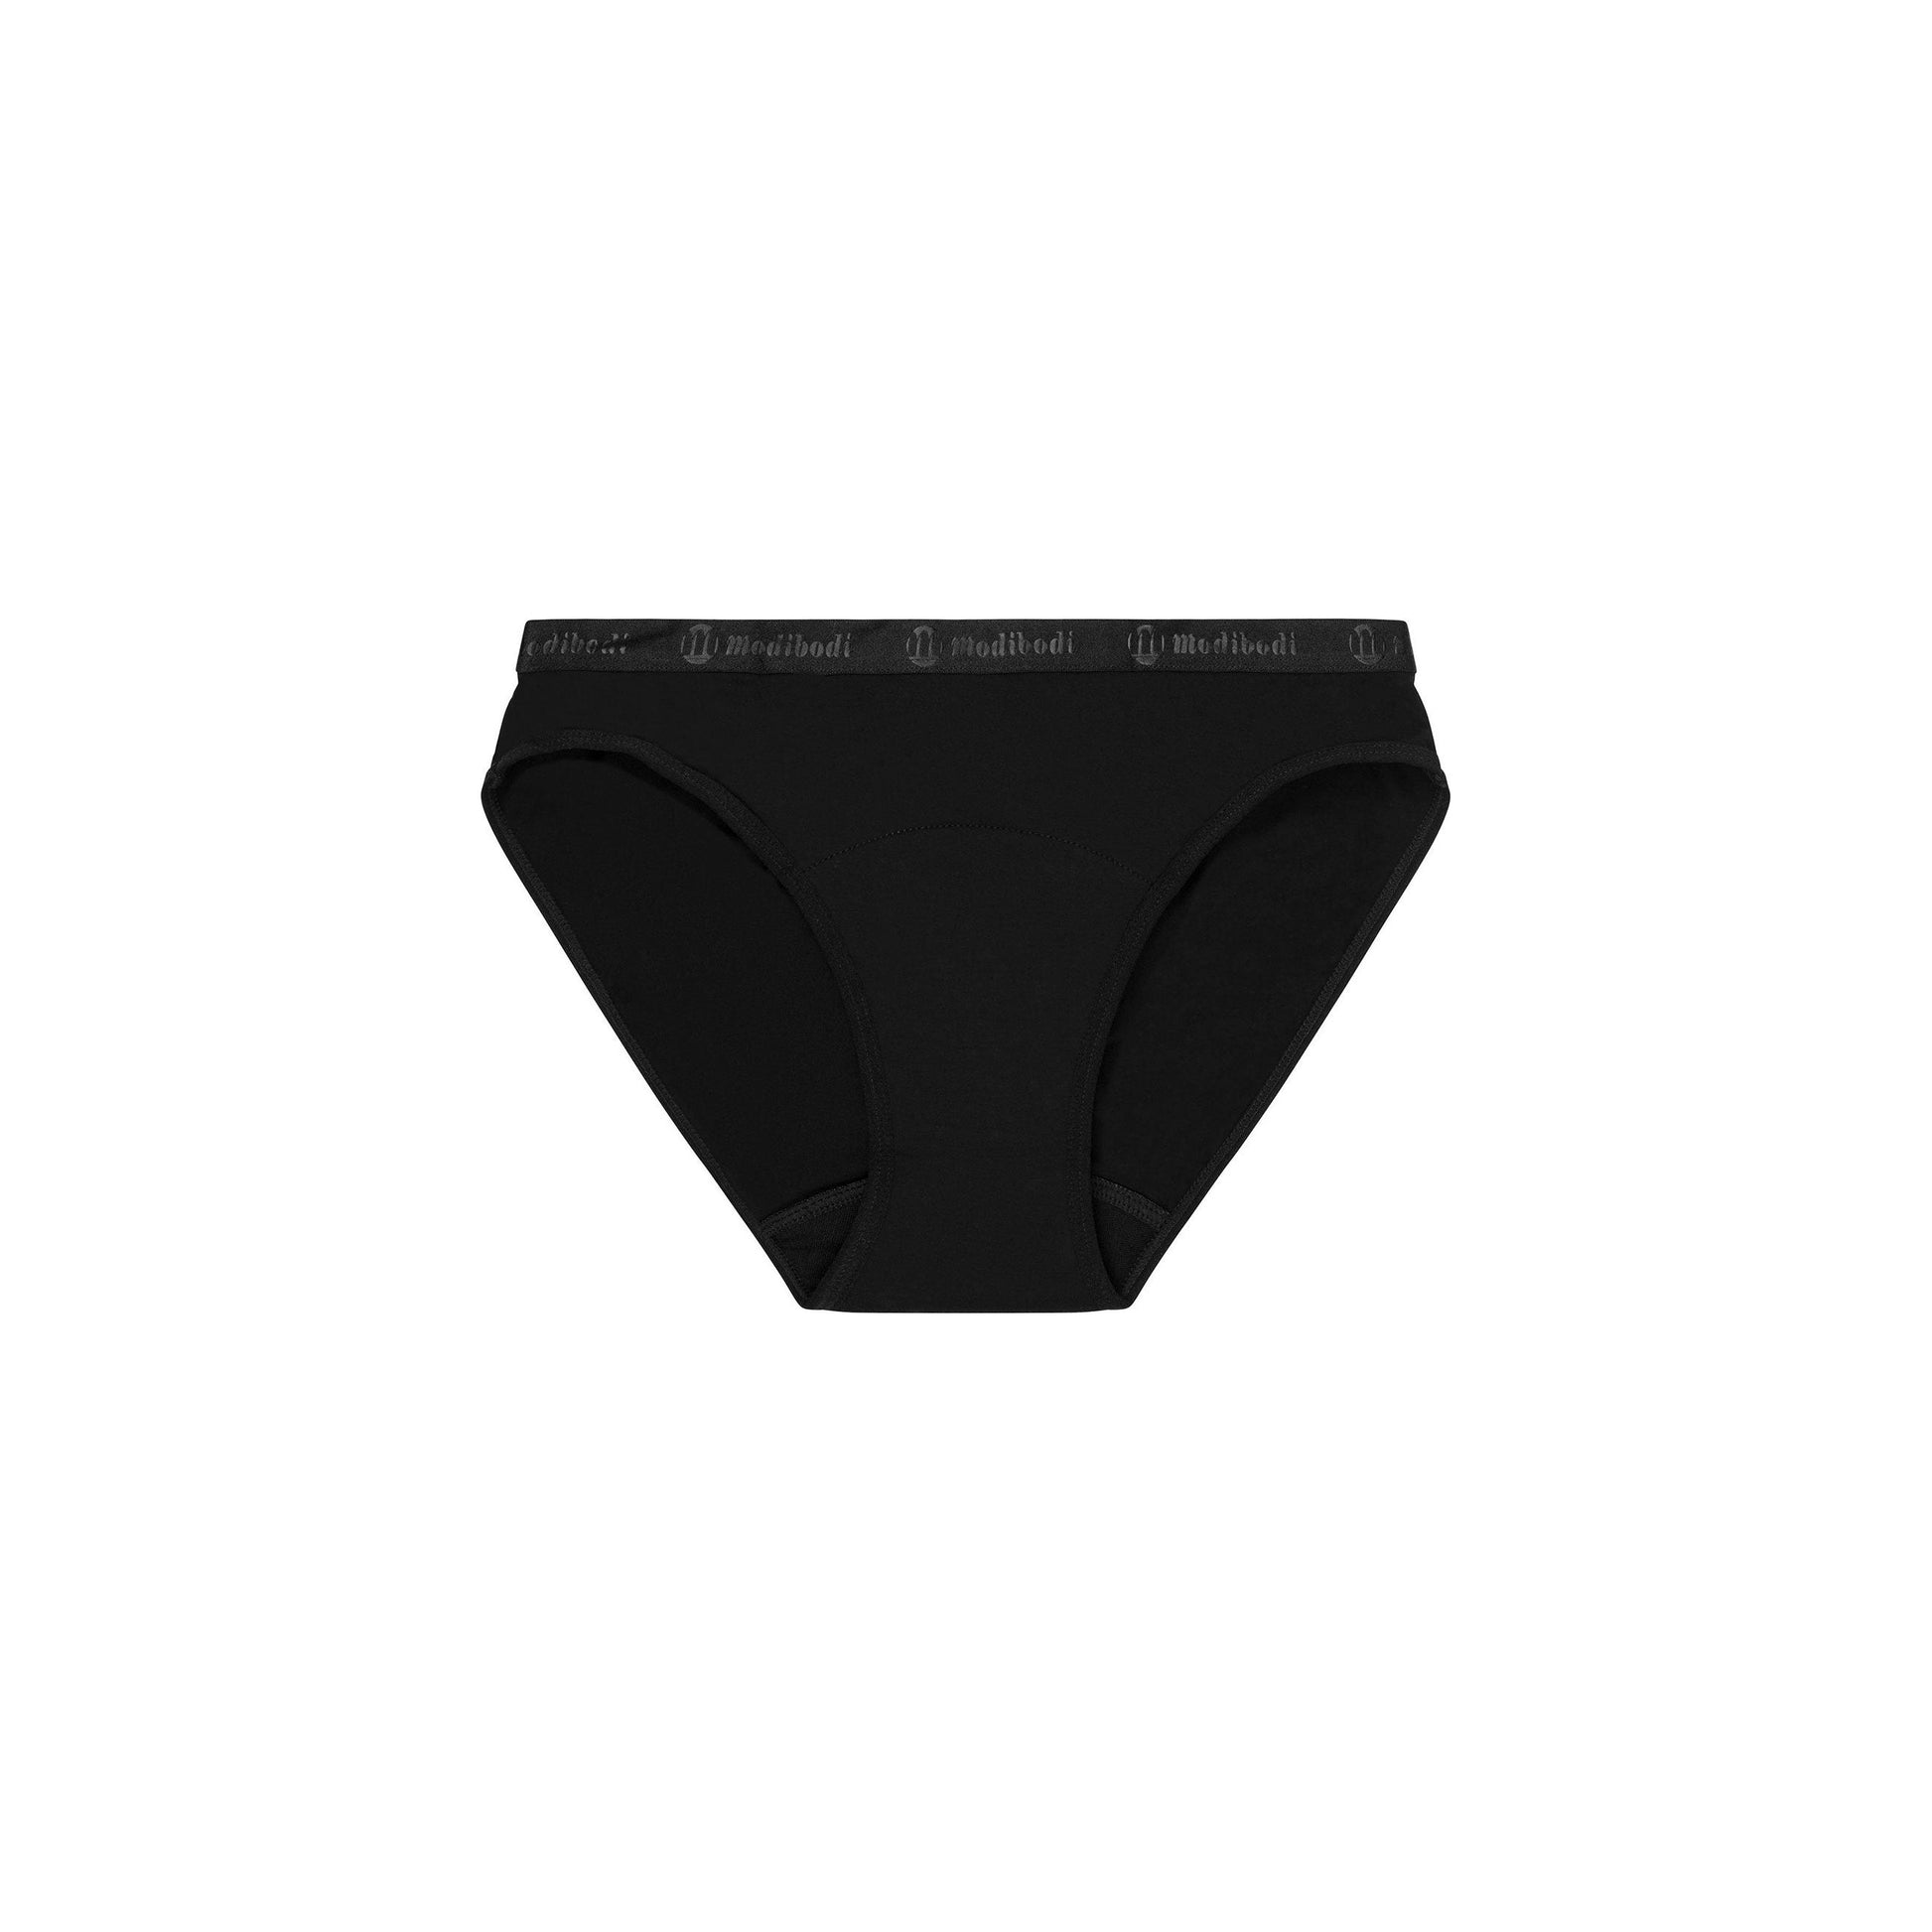 Modibodi Vegan Bikini - Menstruation Underwear - Girls Matters Period  Underwear